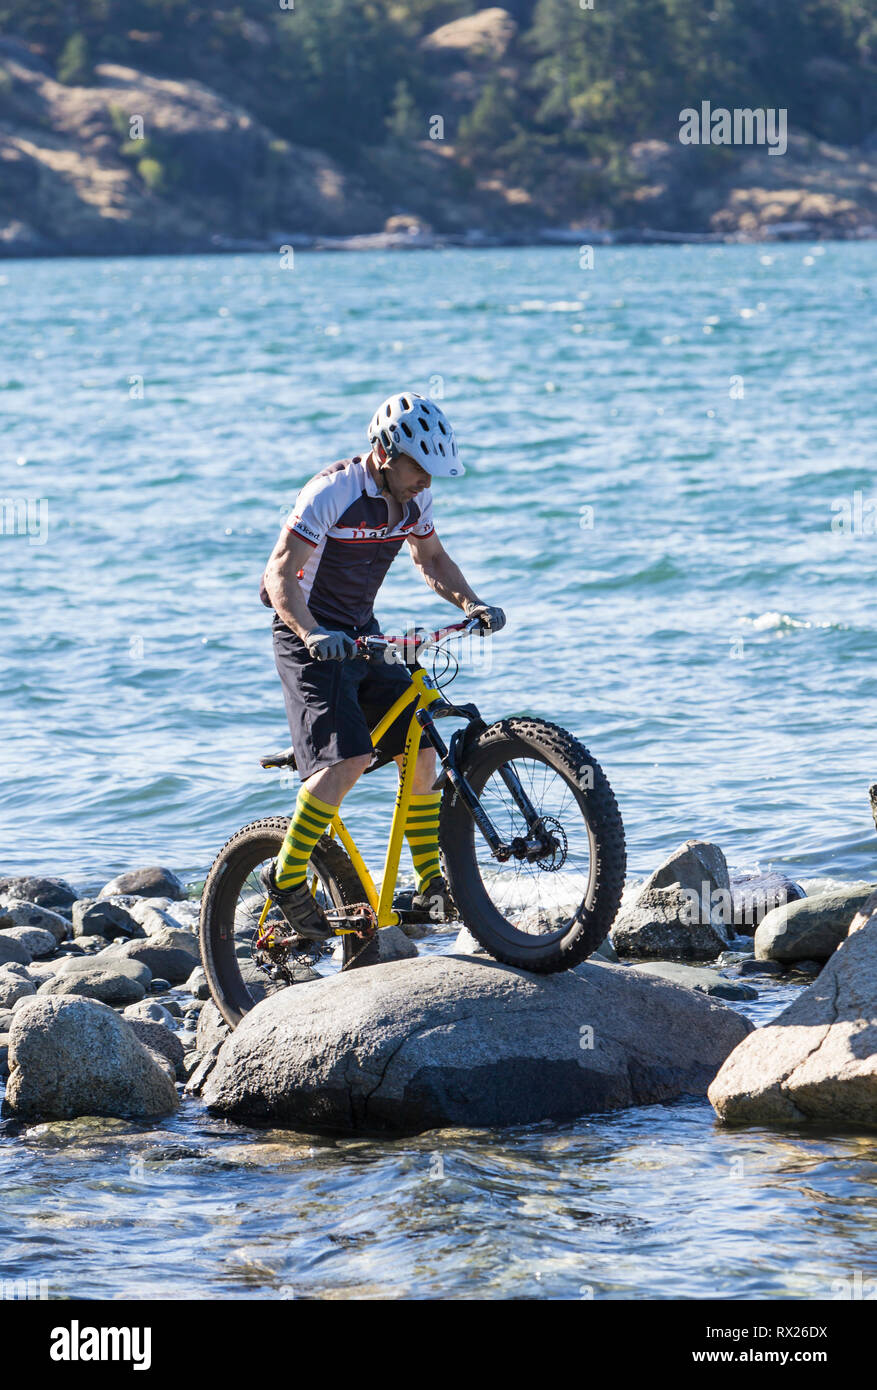 Fat bikes, a new trend in mountain biking allows for riding on more unusual terrain.   Quadra Island, British Columbia, Canada Stock Photo